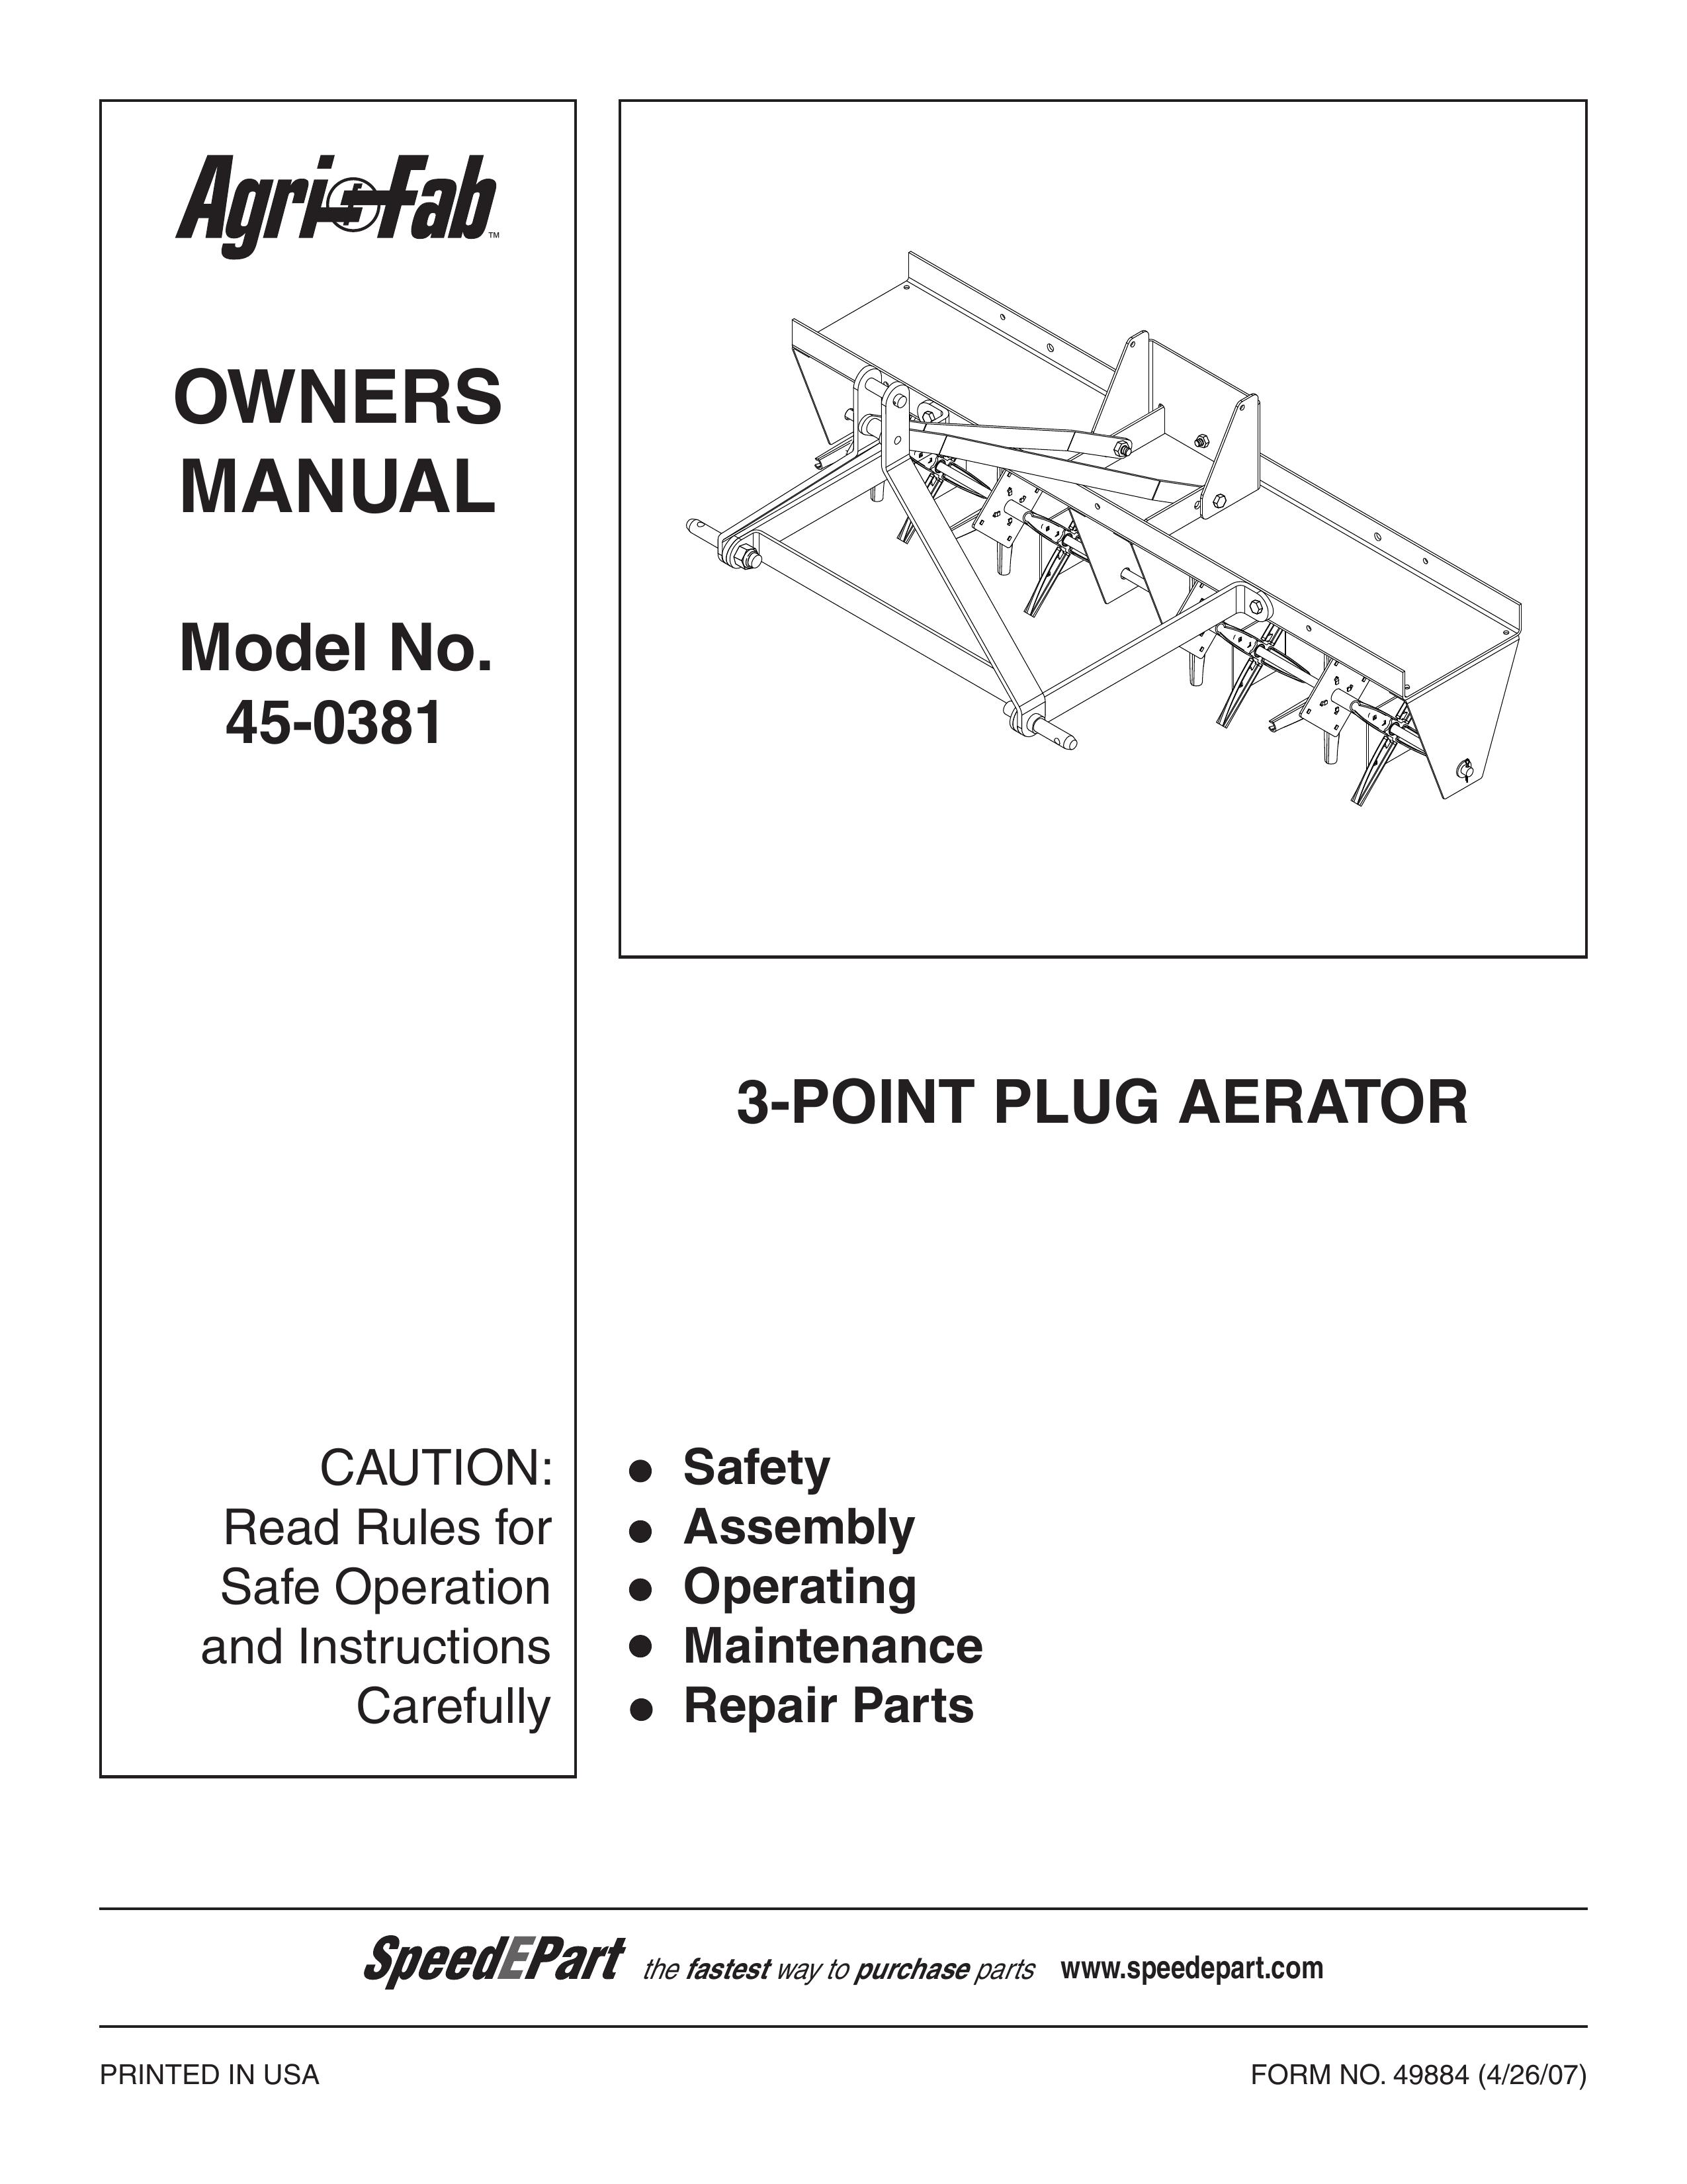 Agri-Fab 45-0381 Lawn Aerator User Manual